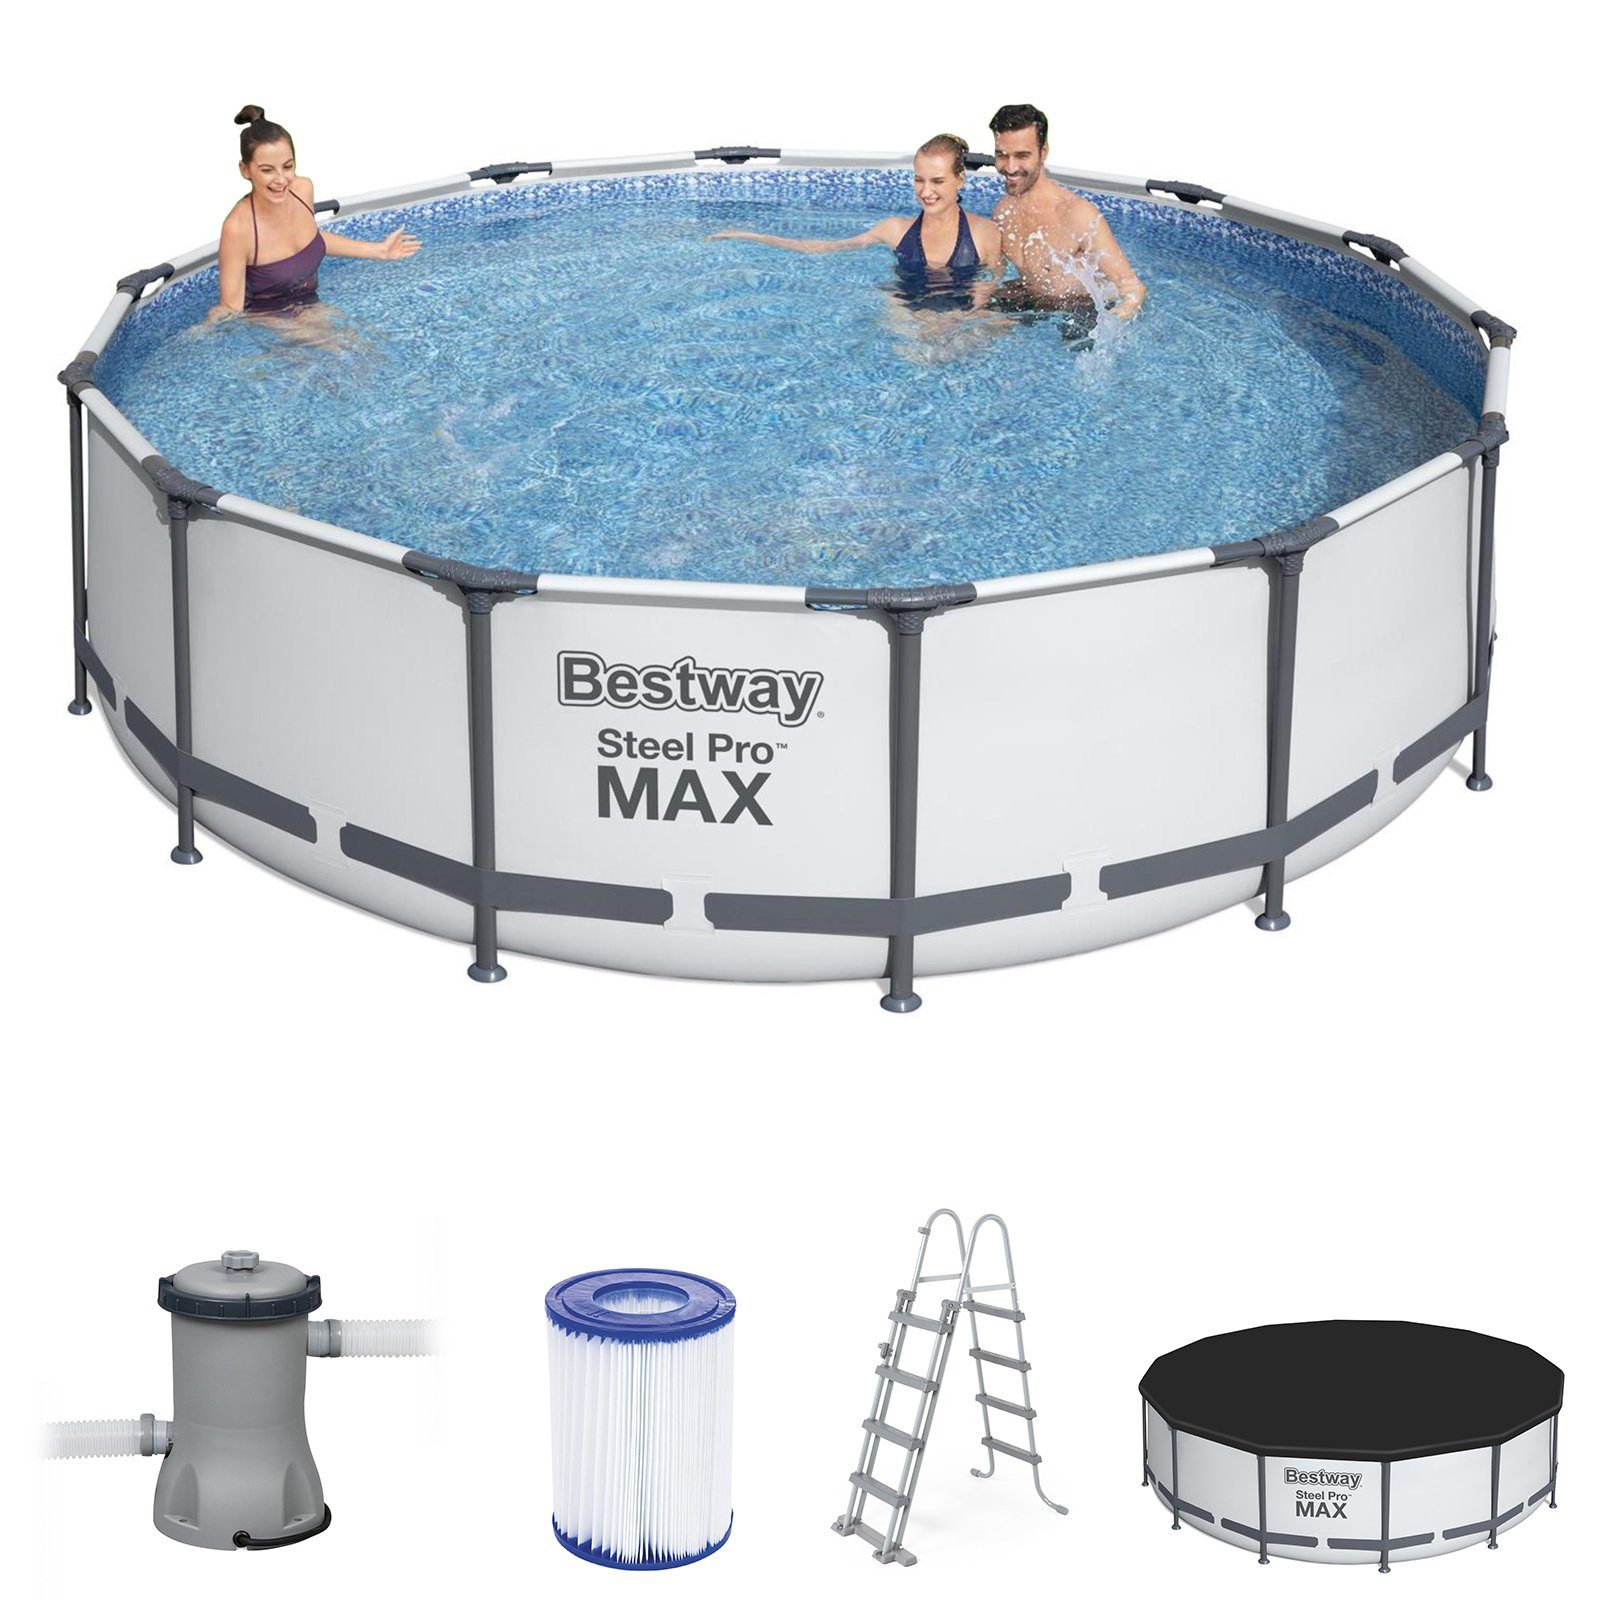 BESTWAY Framepool Steel Pro MAX Pool Swimmingpool rund weiß Pumpe Leiter Cover 427x107cm (56950)